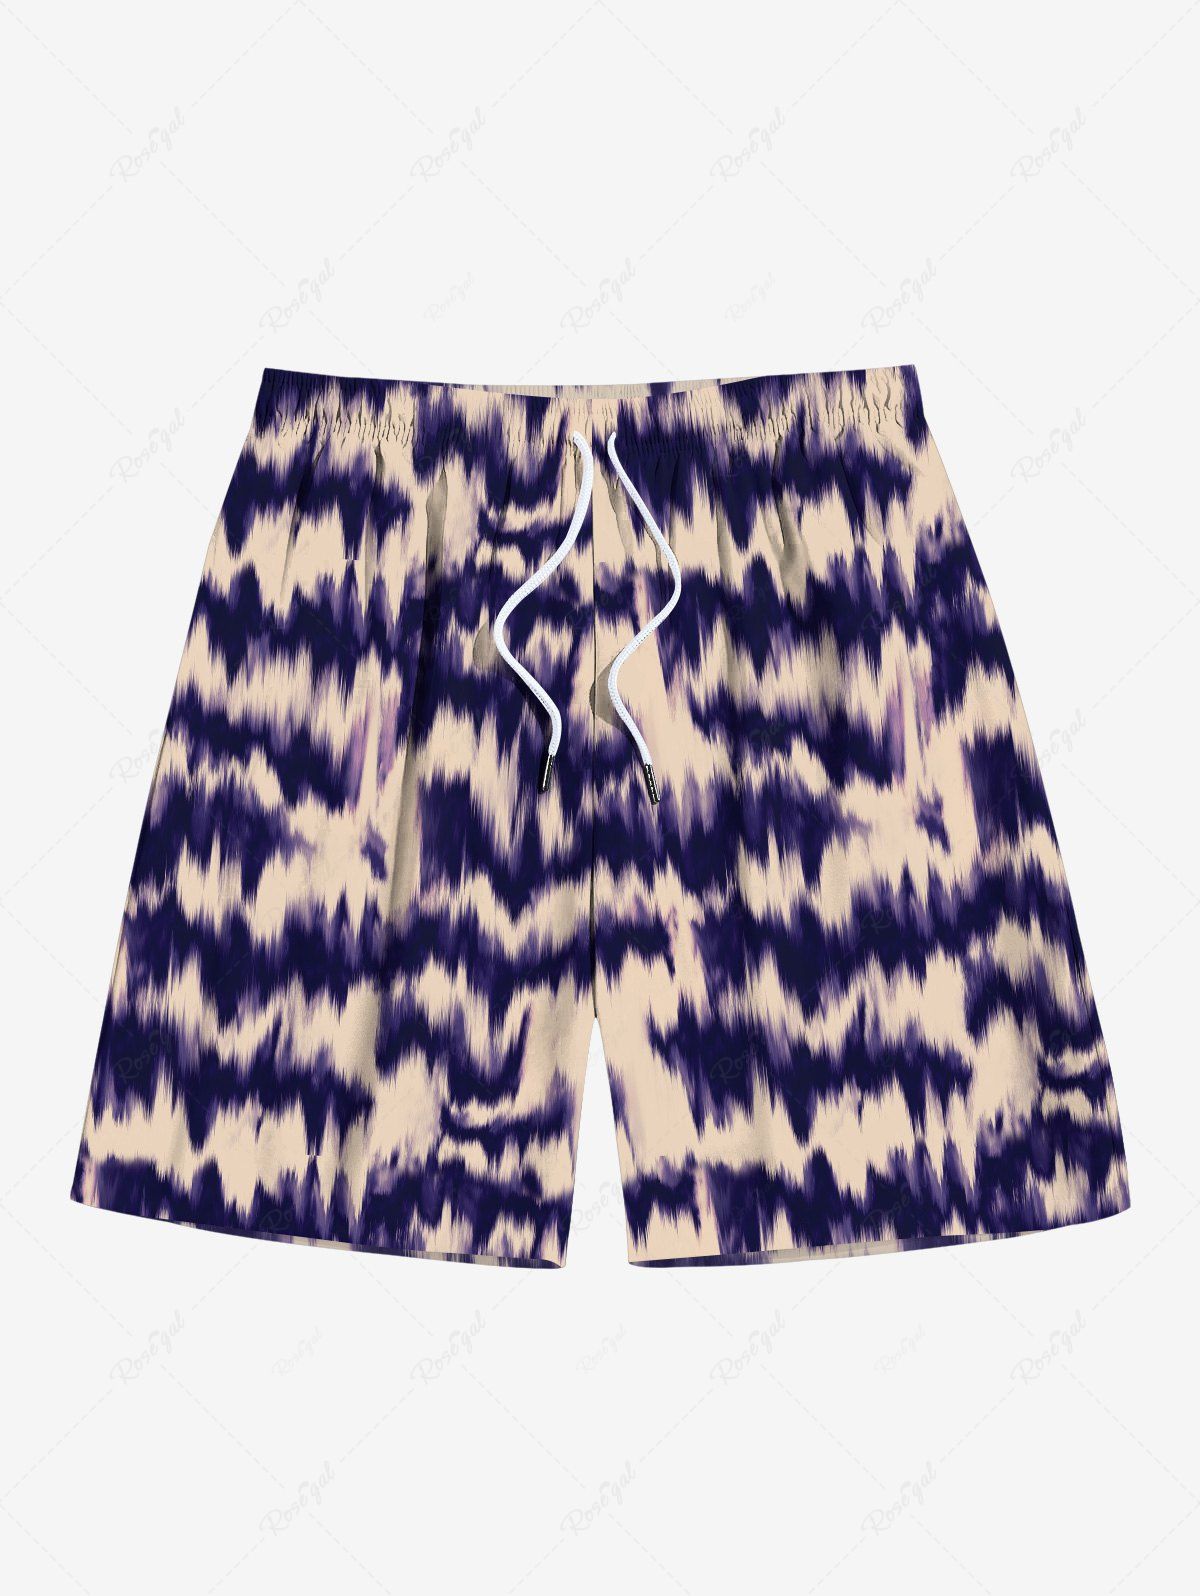 Discount Men's Vacation Style Streak Dye Colorblock Print Beach Shorts  